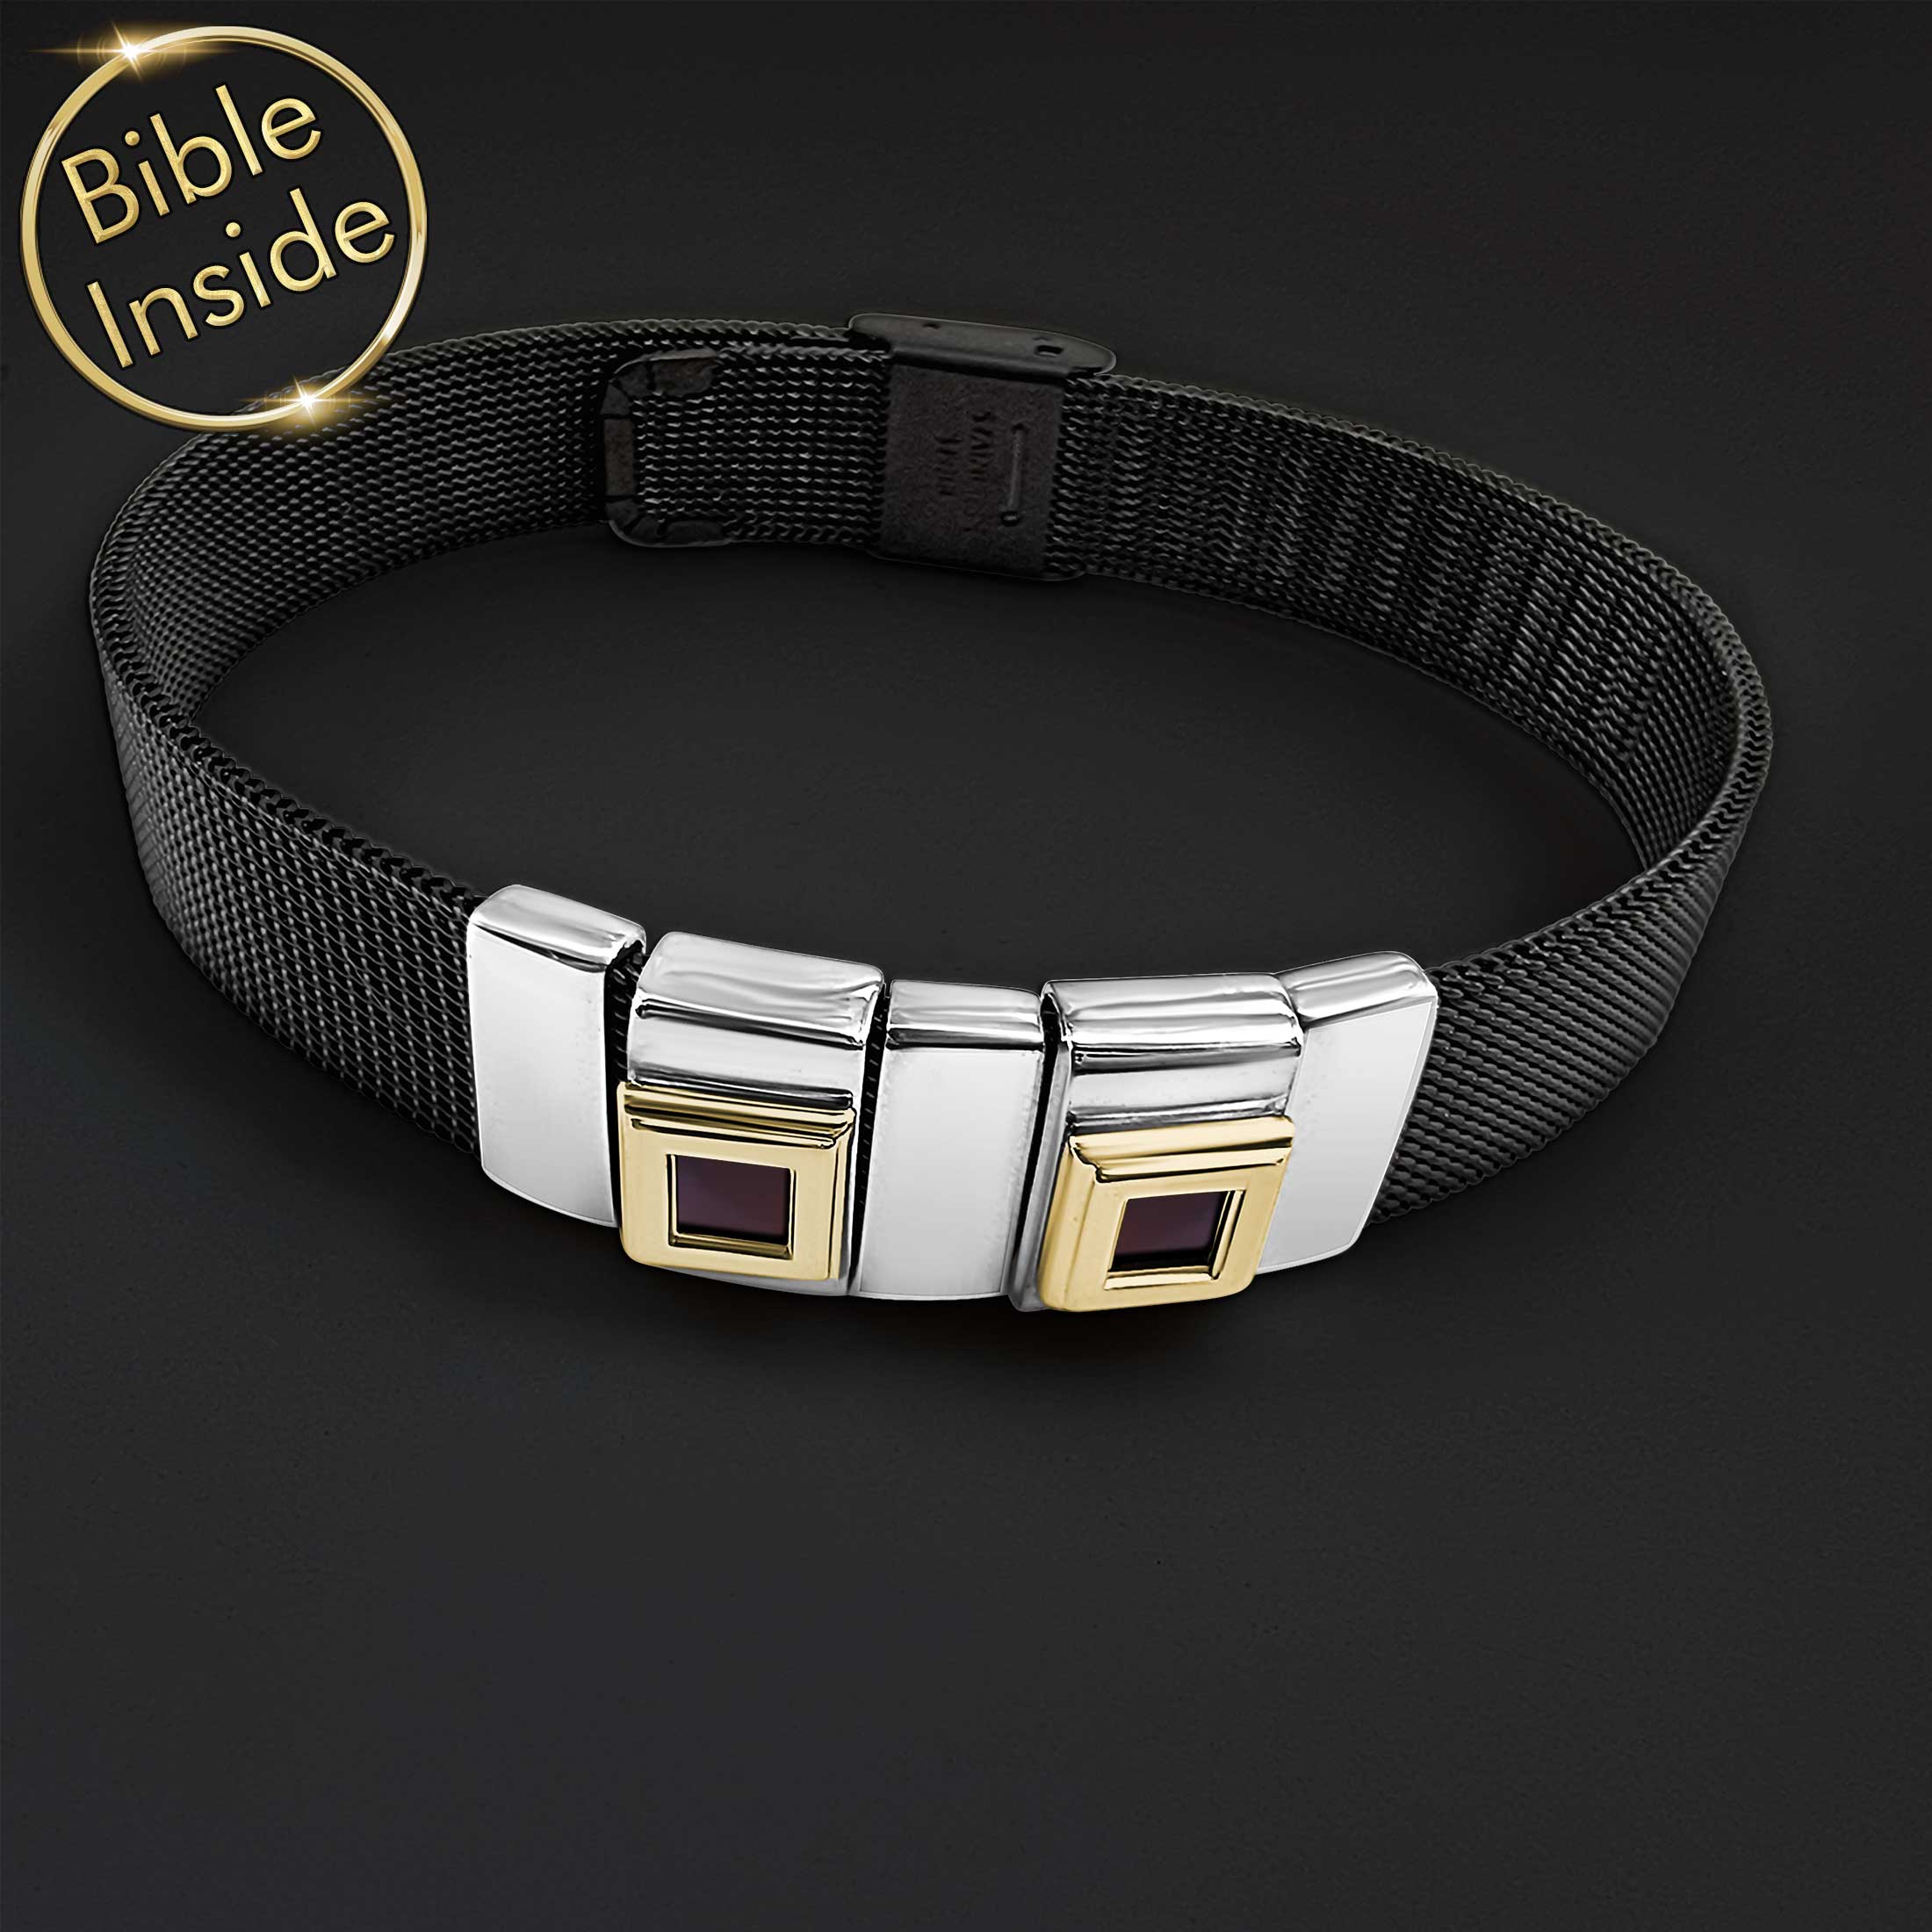 Christian Bracelets With Nano Bible for men - Nano Jewelry